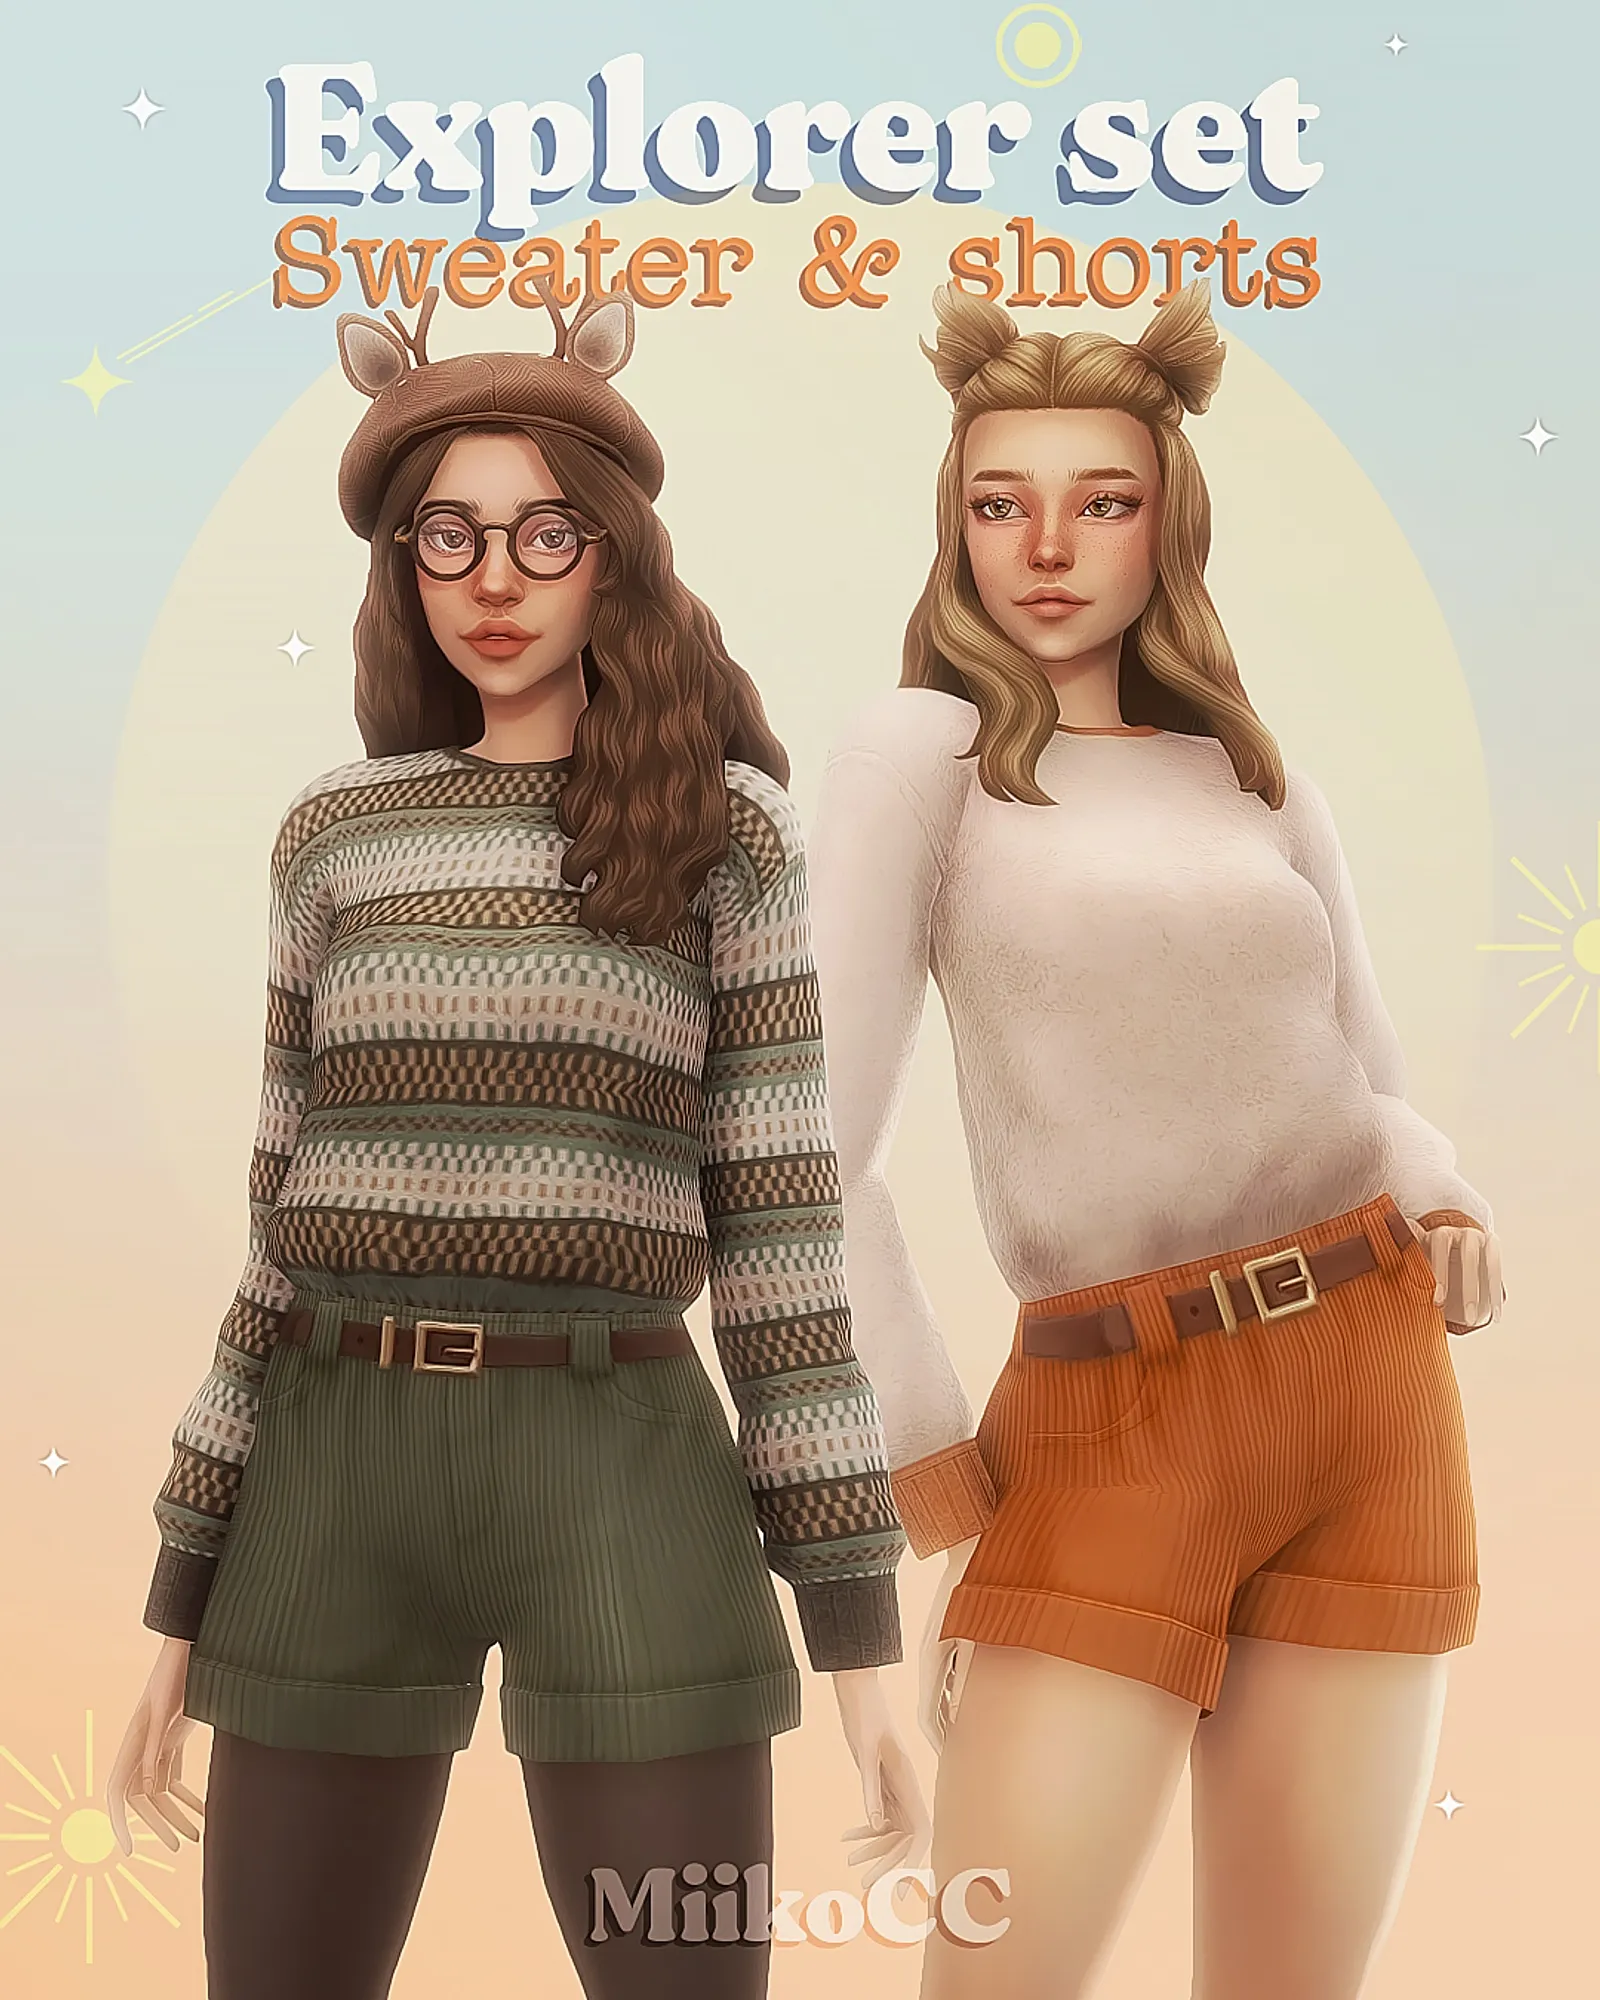 Explorer set ???? Sweater & shorts